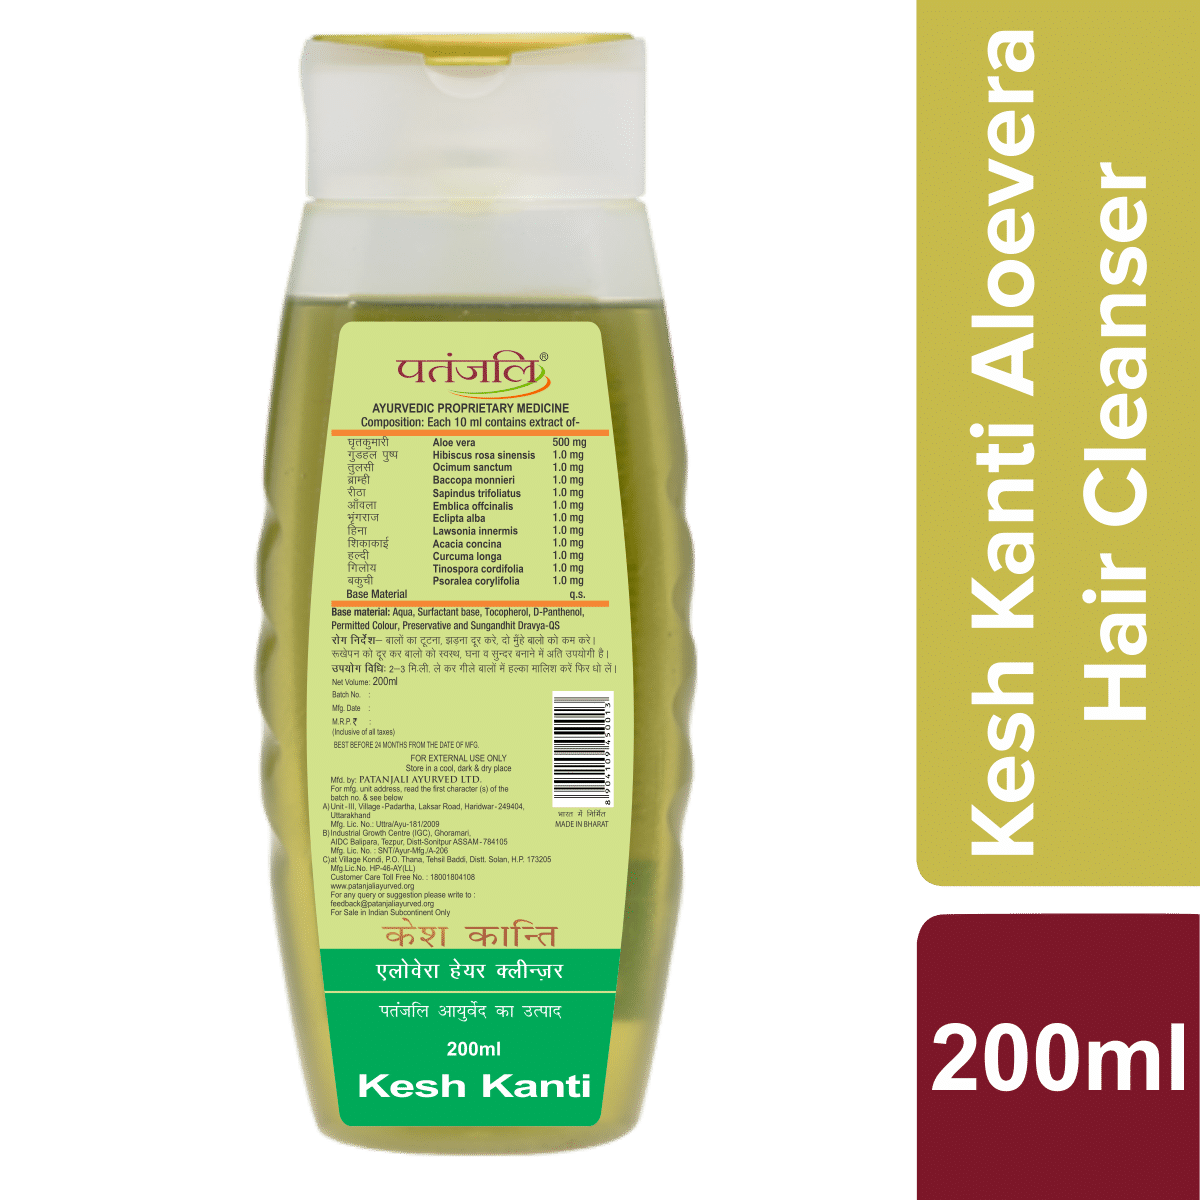 Patanjali Kesh Kanti Aloe Vera Hair Cleanser, 200 ml, Pack of 1 